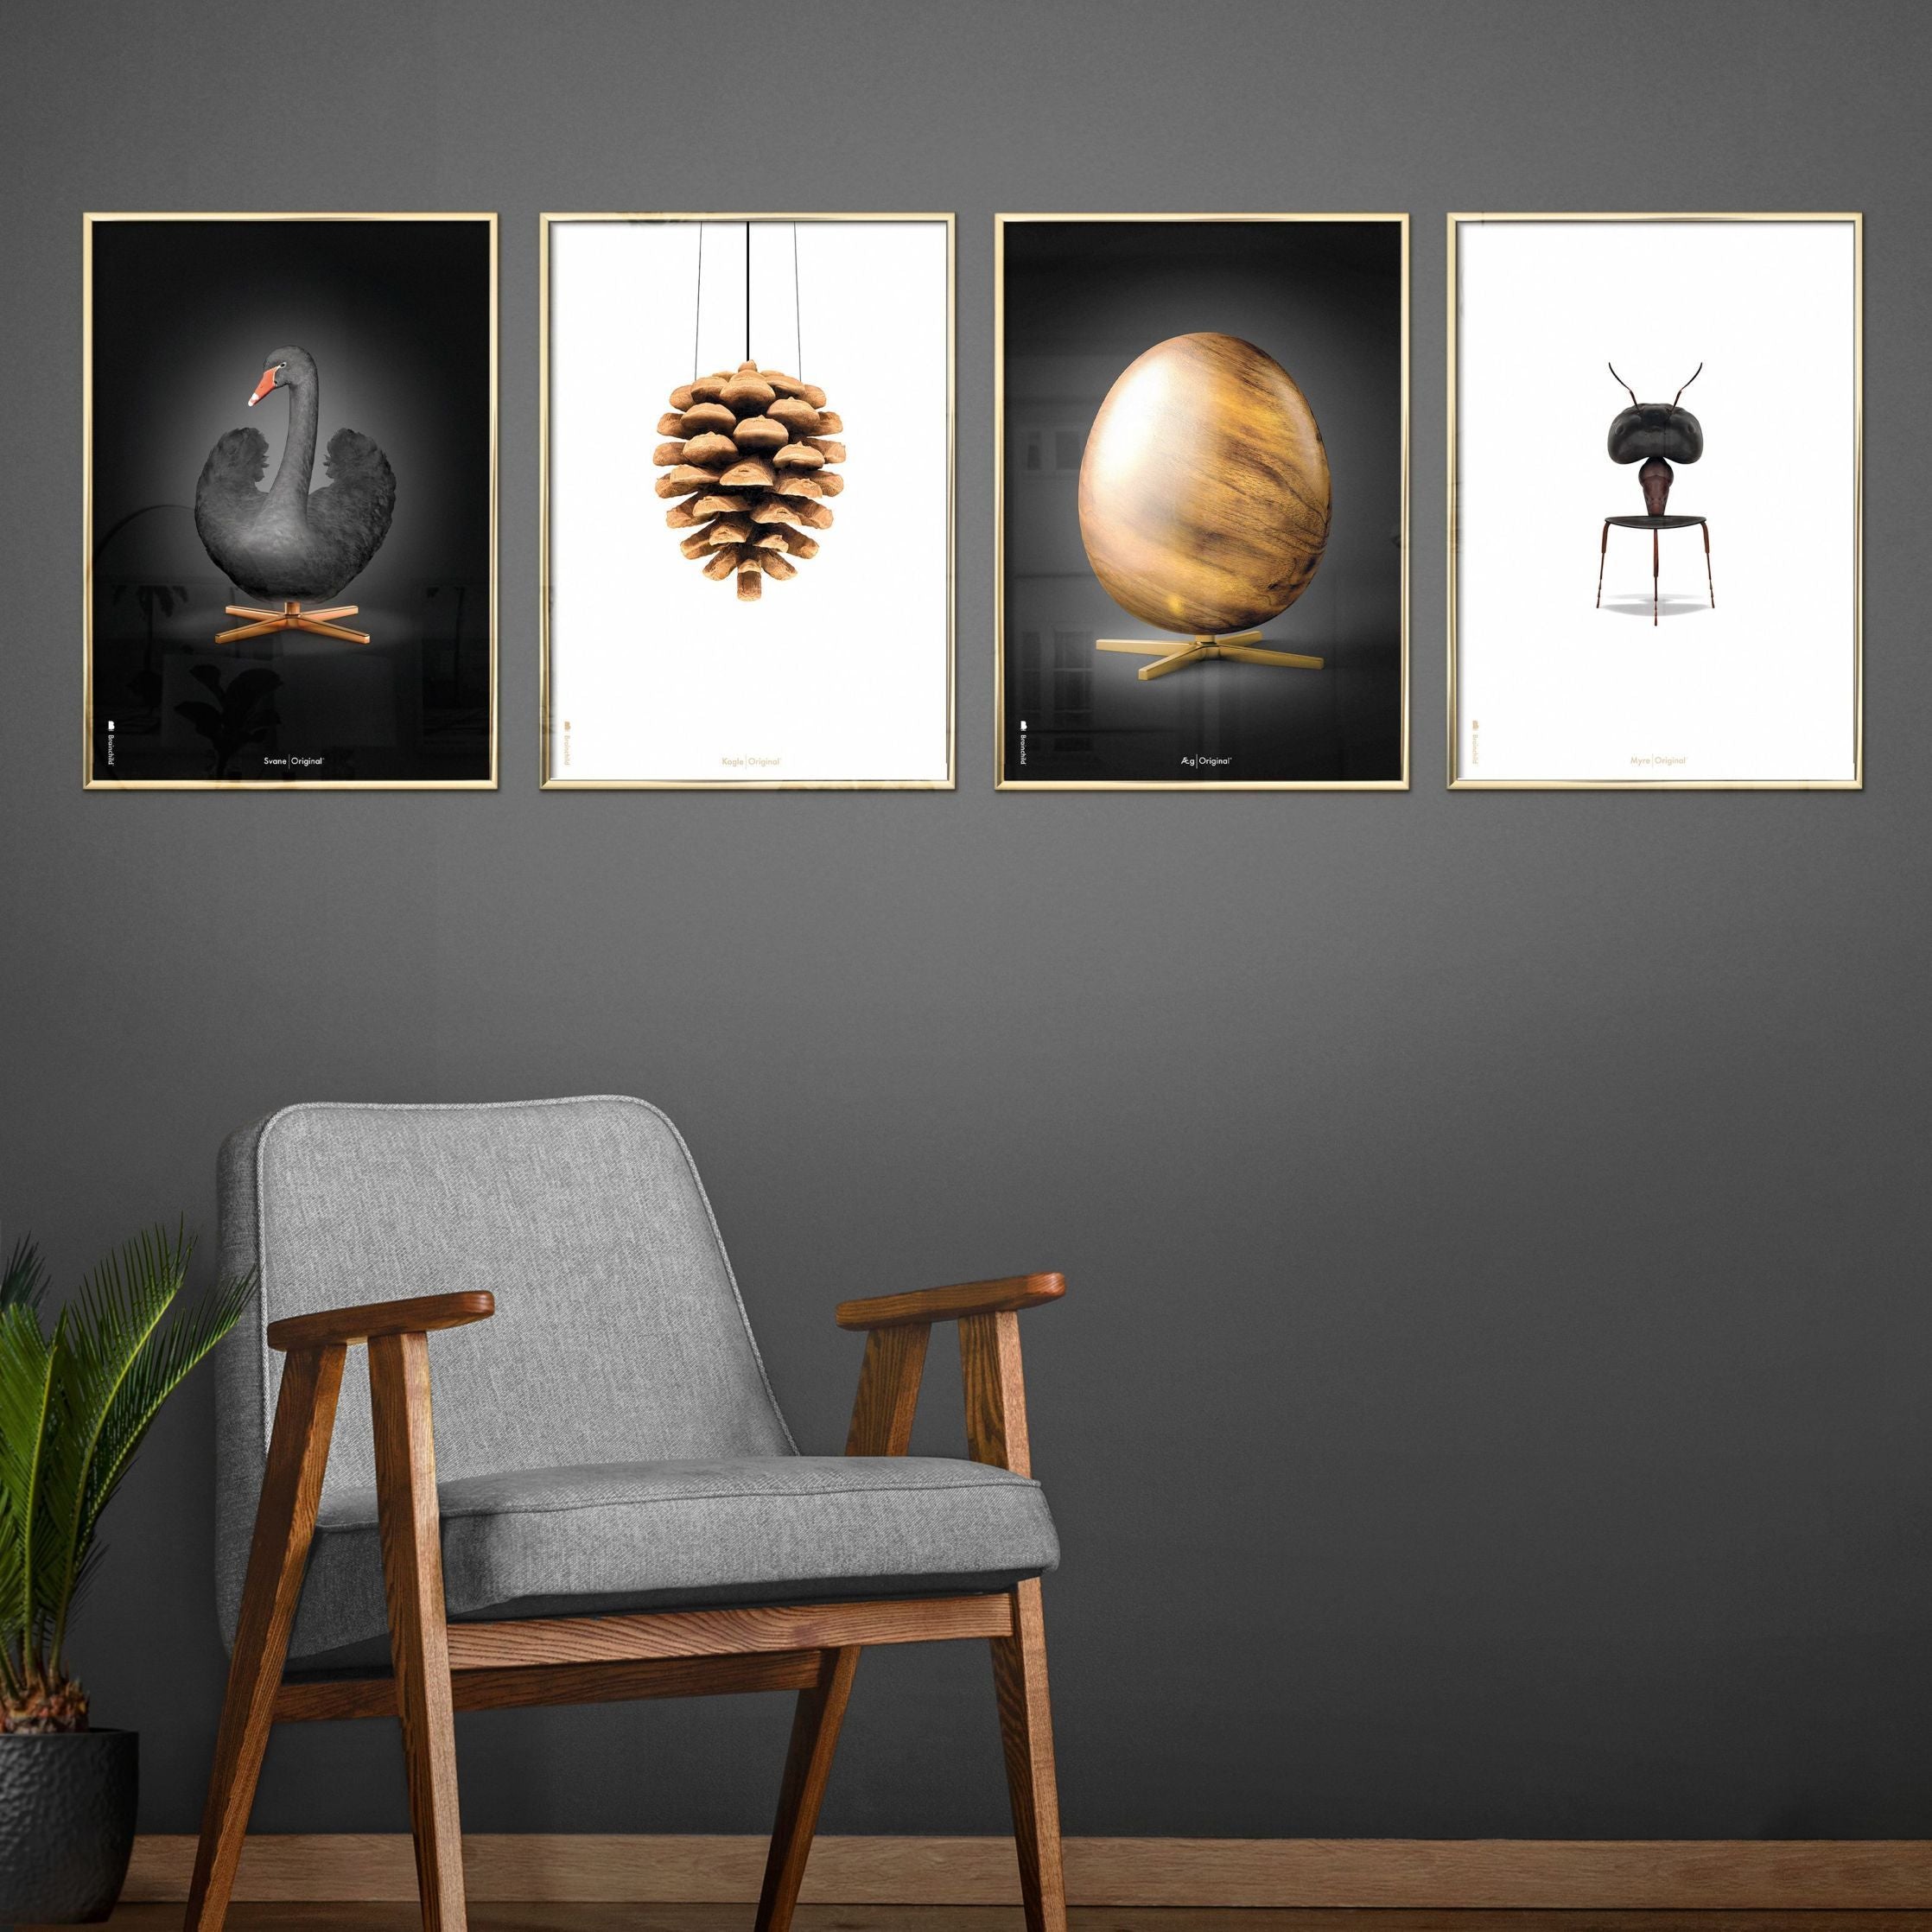 Brainchild Ant Classic Poster, Frame Made Of Dark Wood 50x70 Cm, White Background